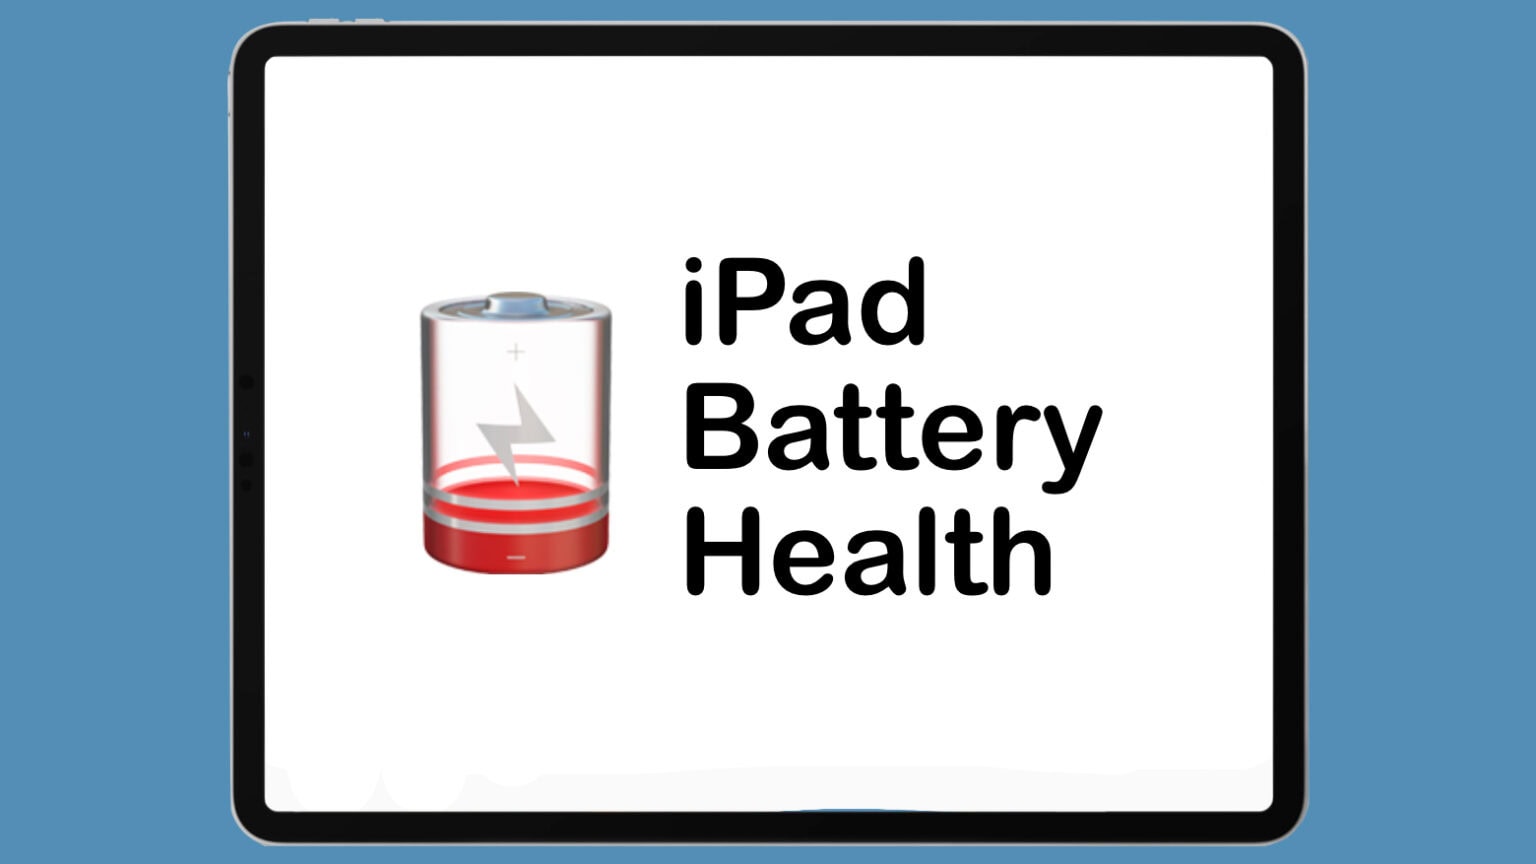 iPad Battery Health How To